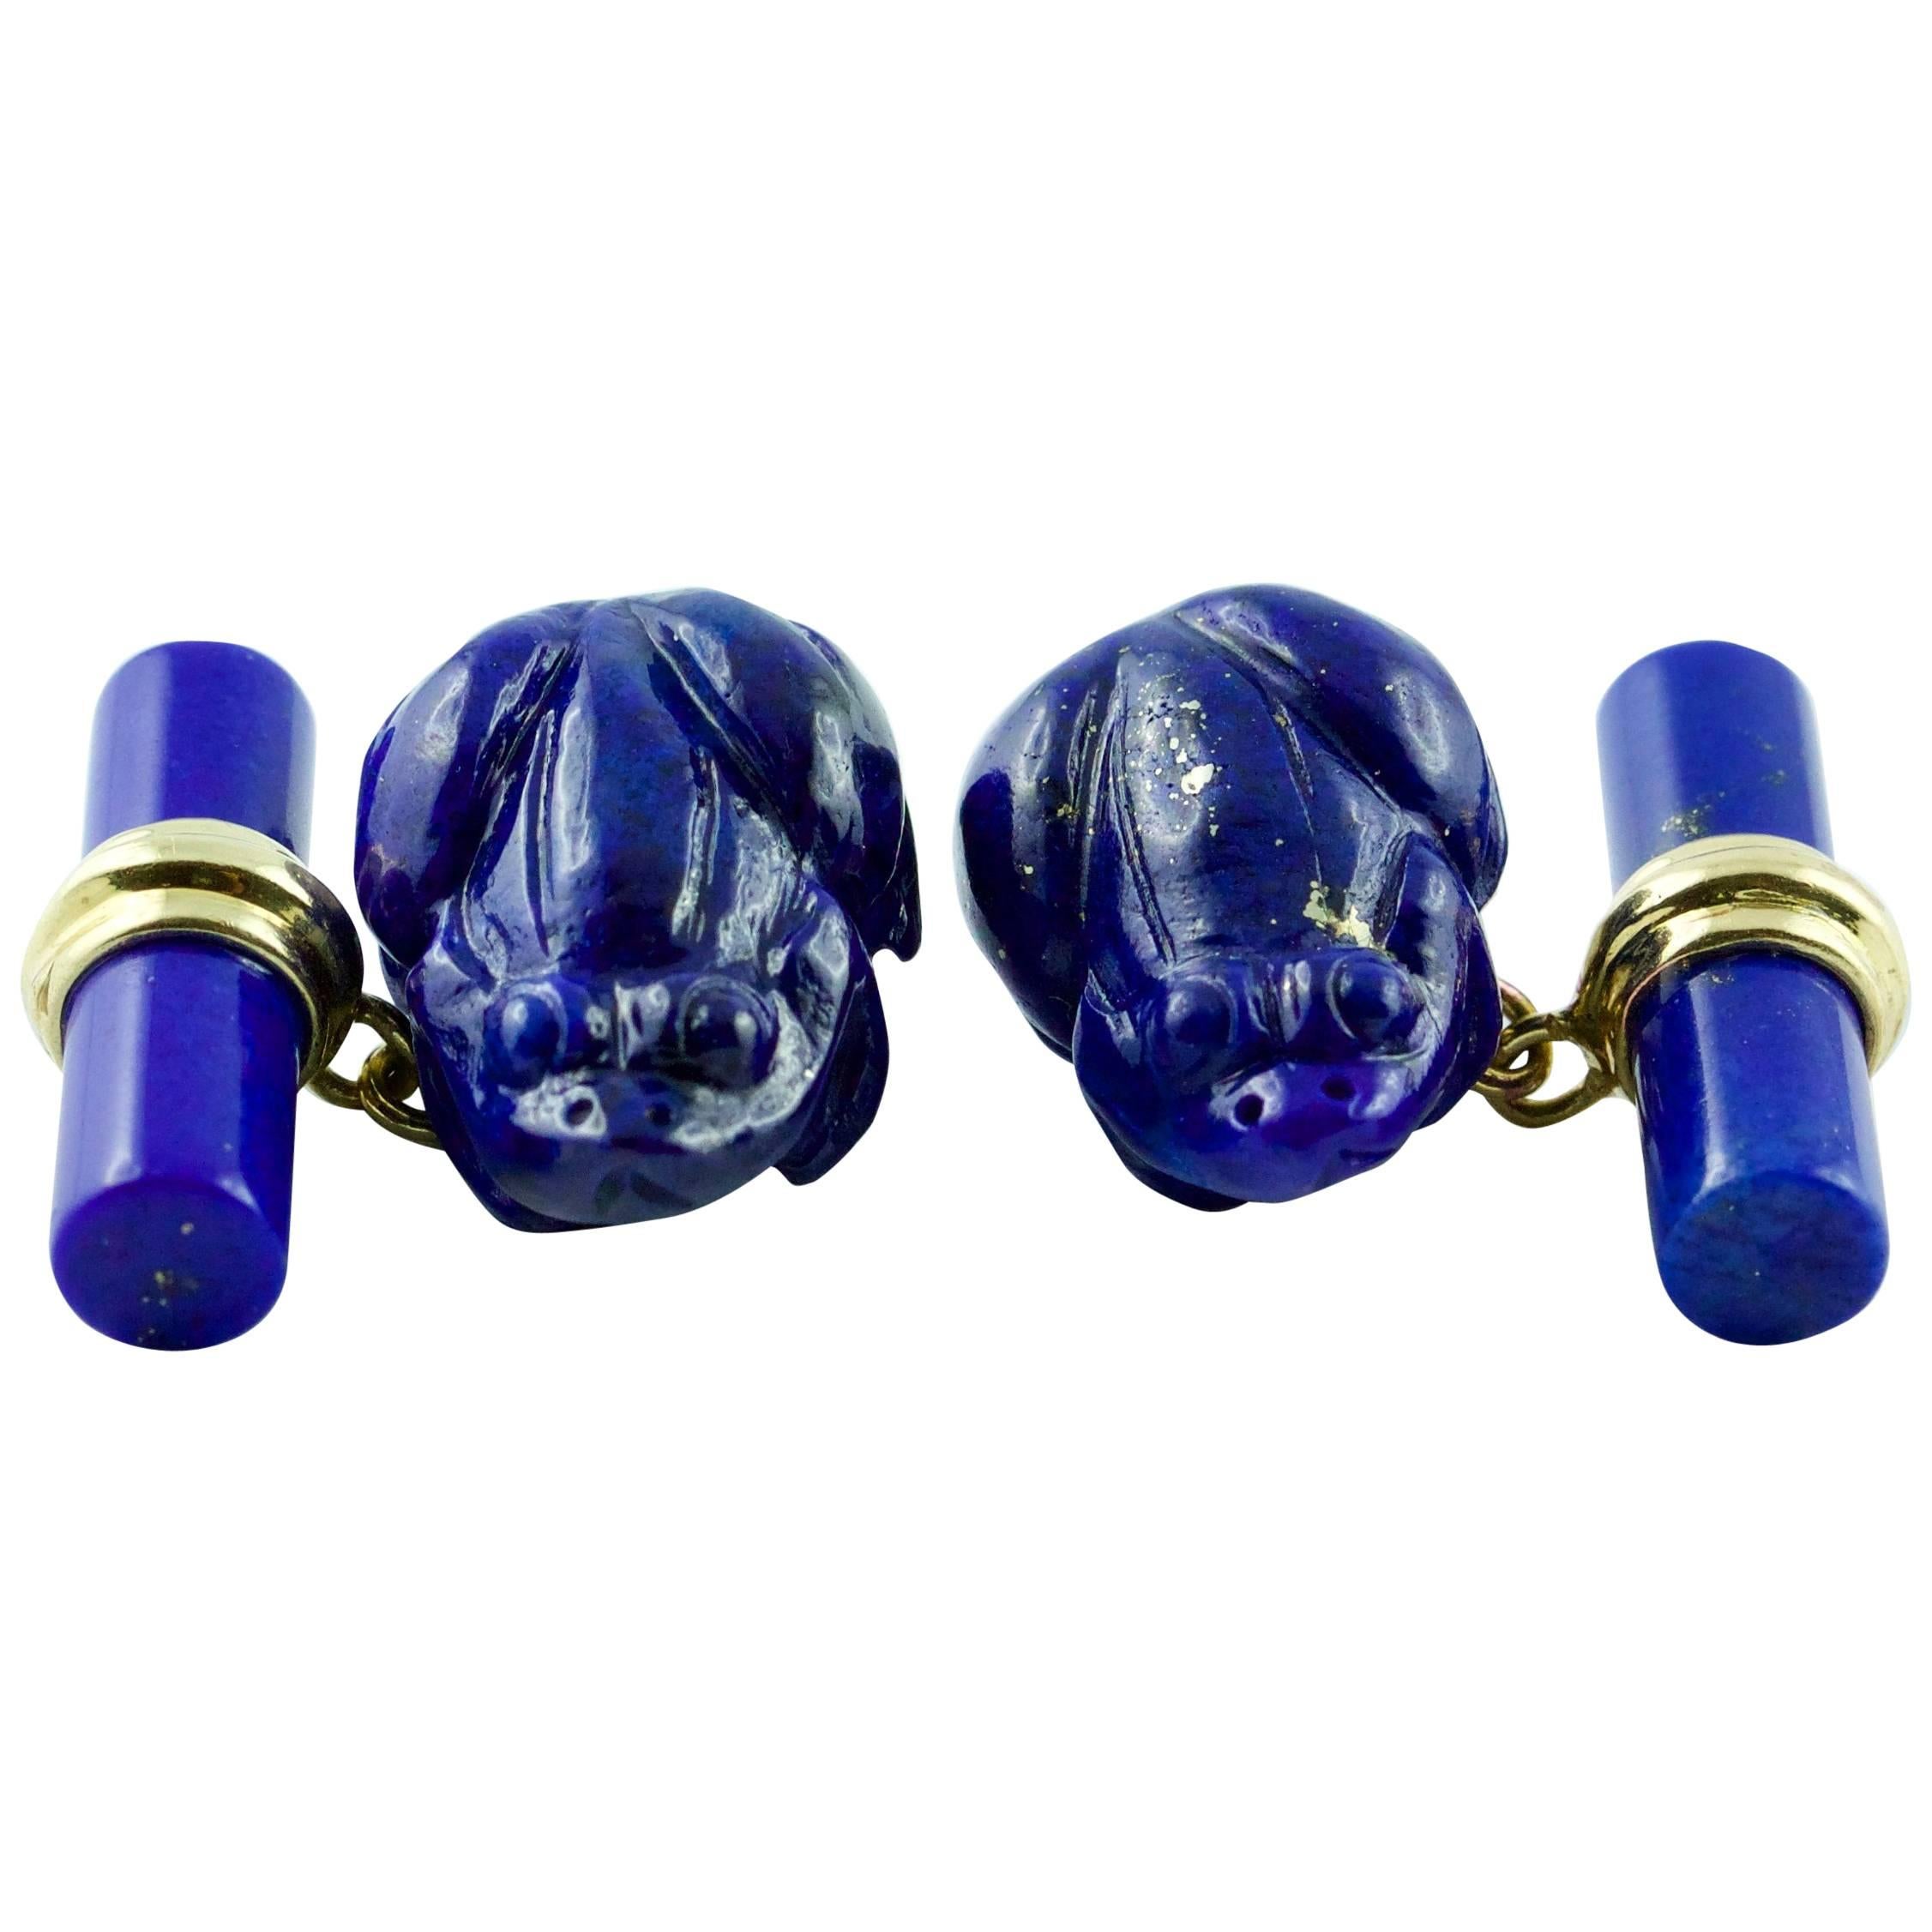 18 Karat Yellow Gold Frog Cufflinks in Lapis Lazuli